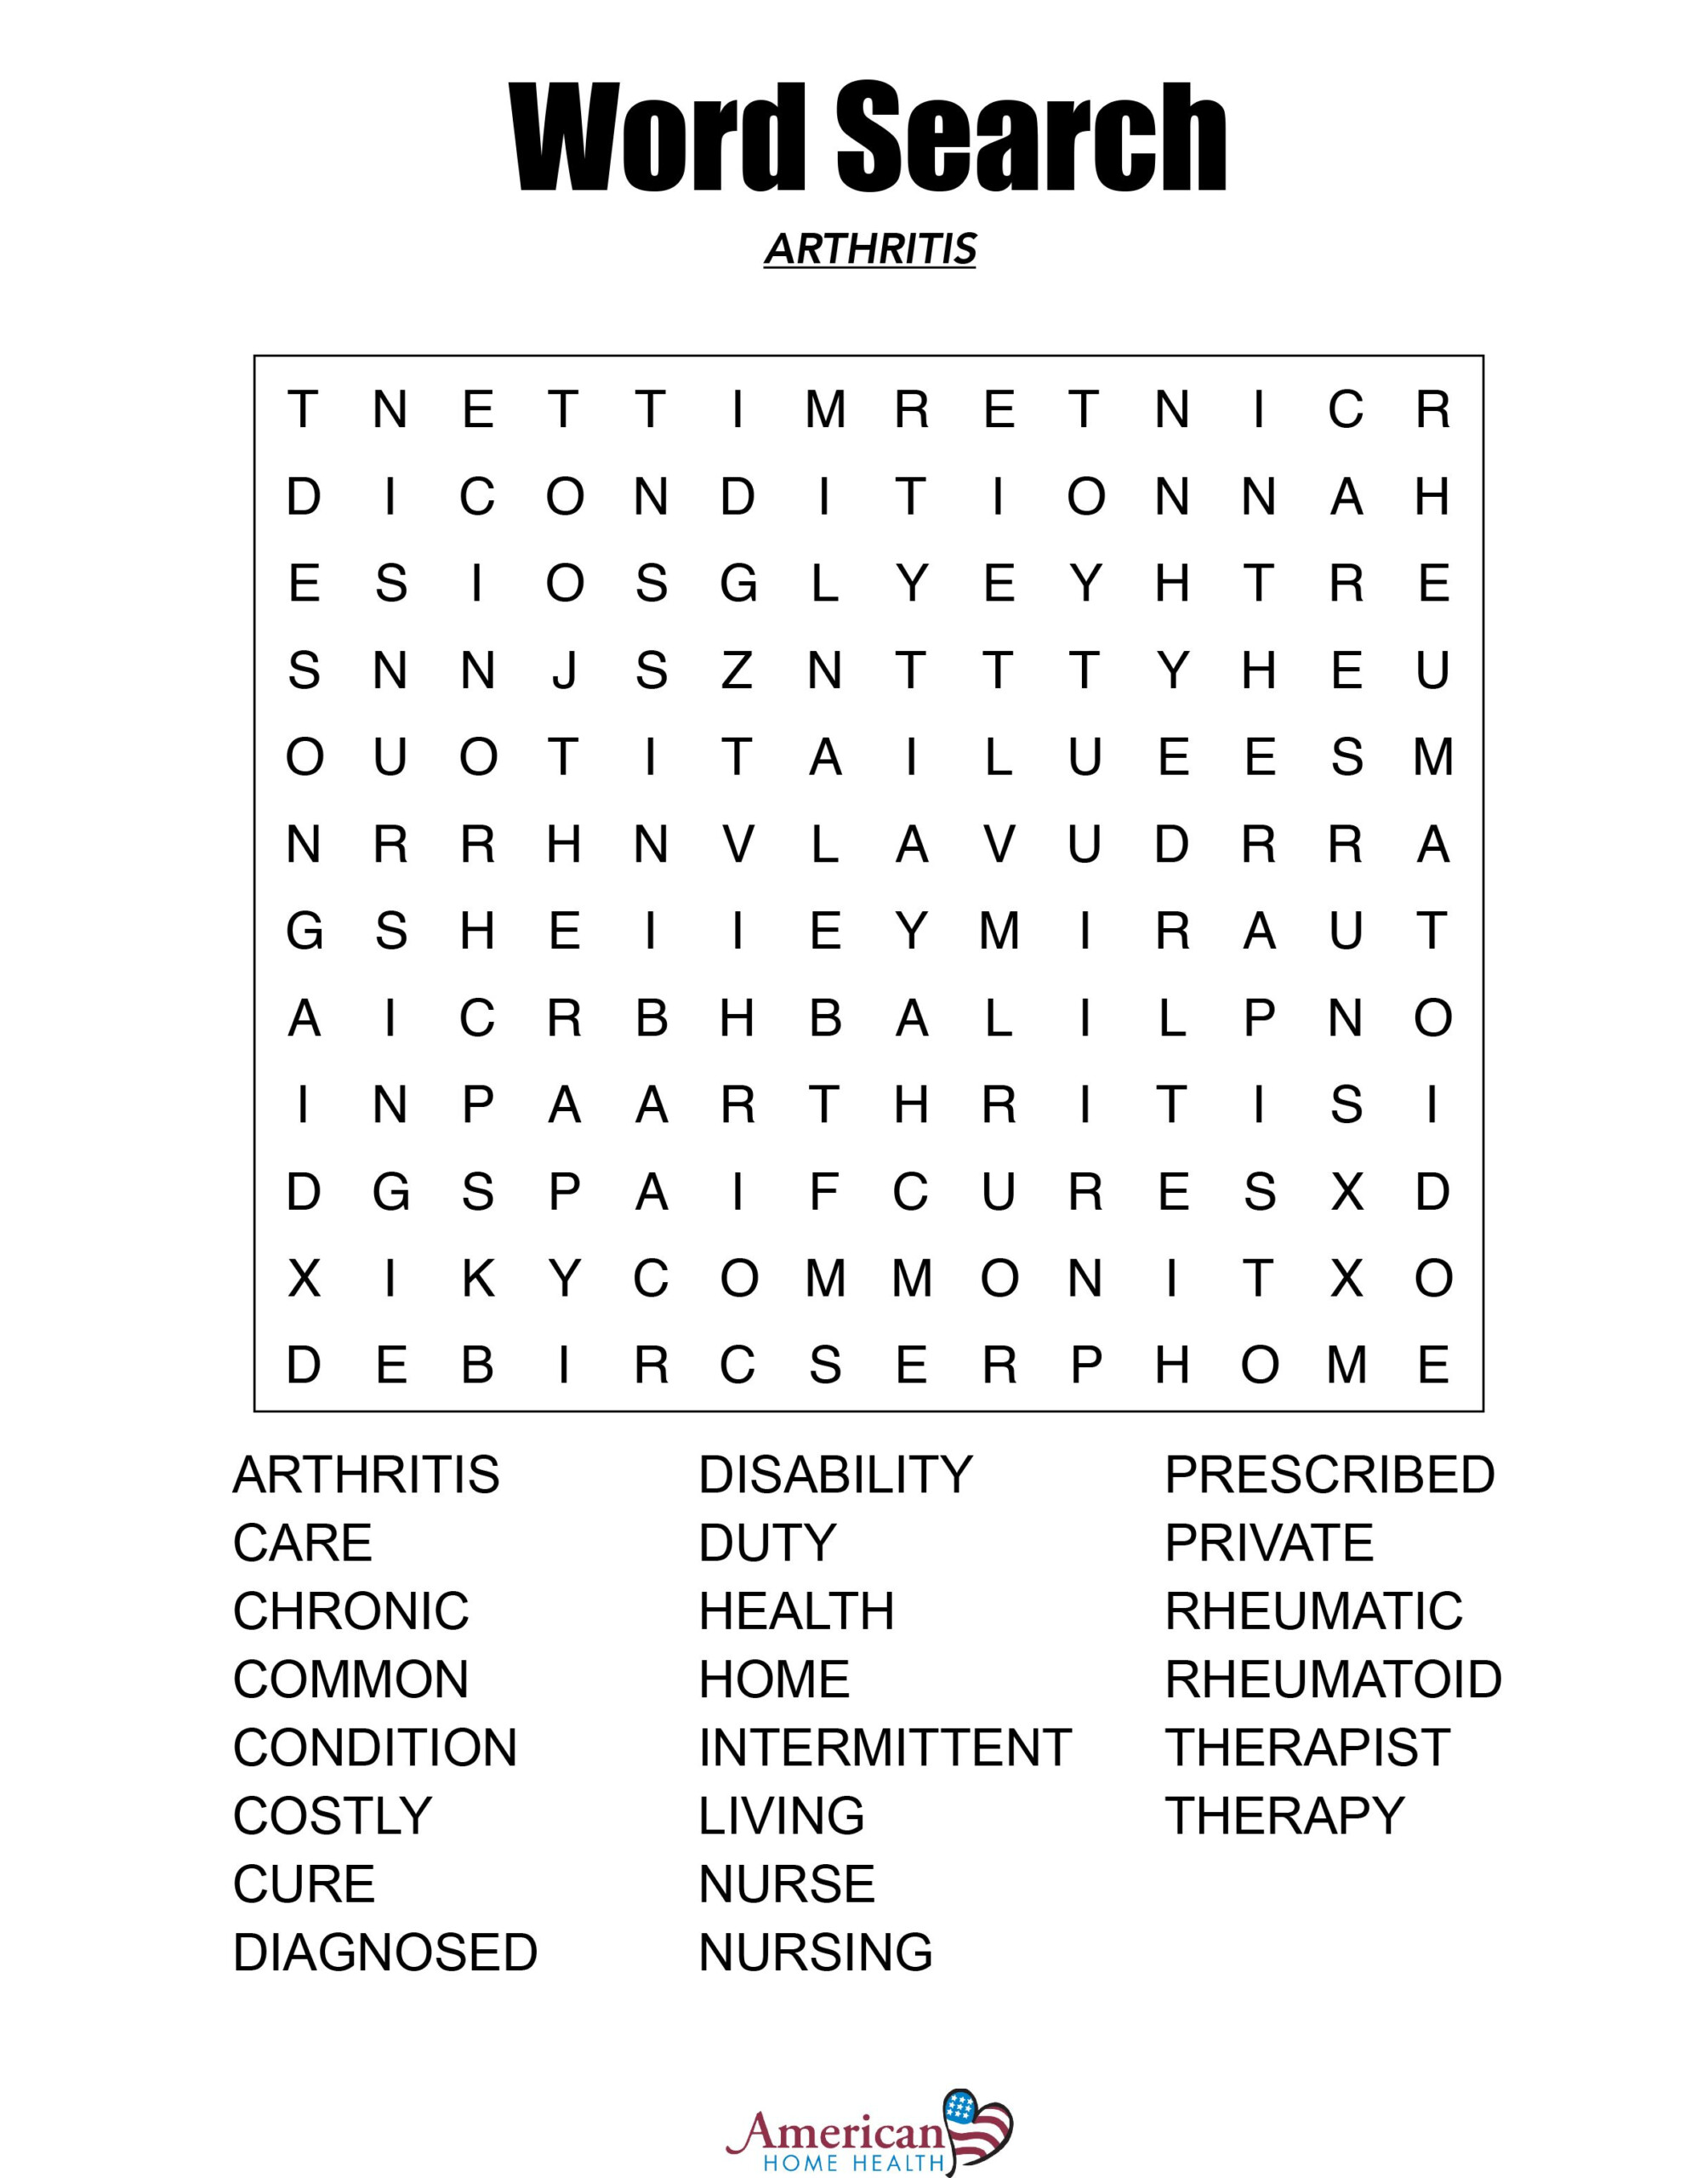 Word Search Arthritis Arthritis Word Search Puzzles Word Search  - Arthritis Crossword Puzzles Printable Easy